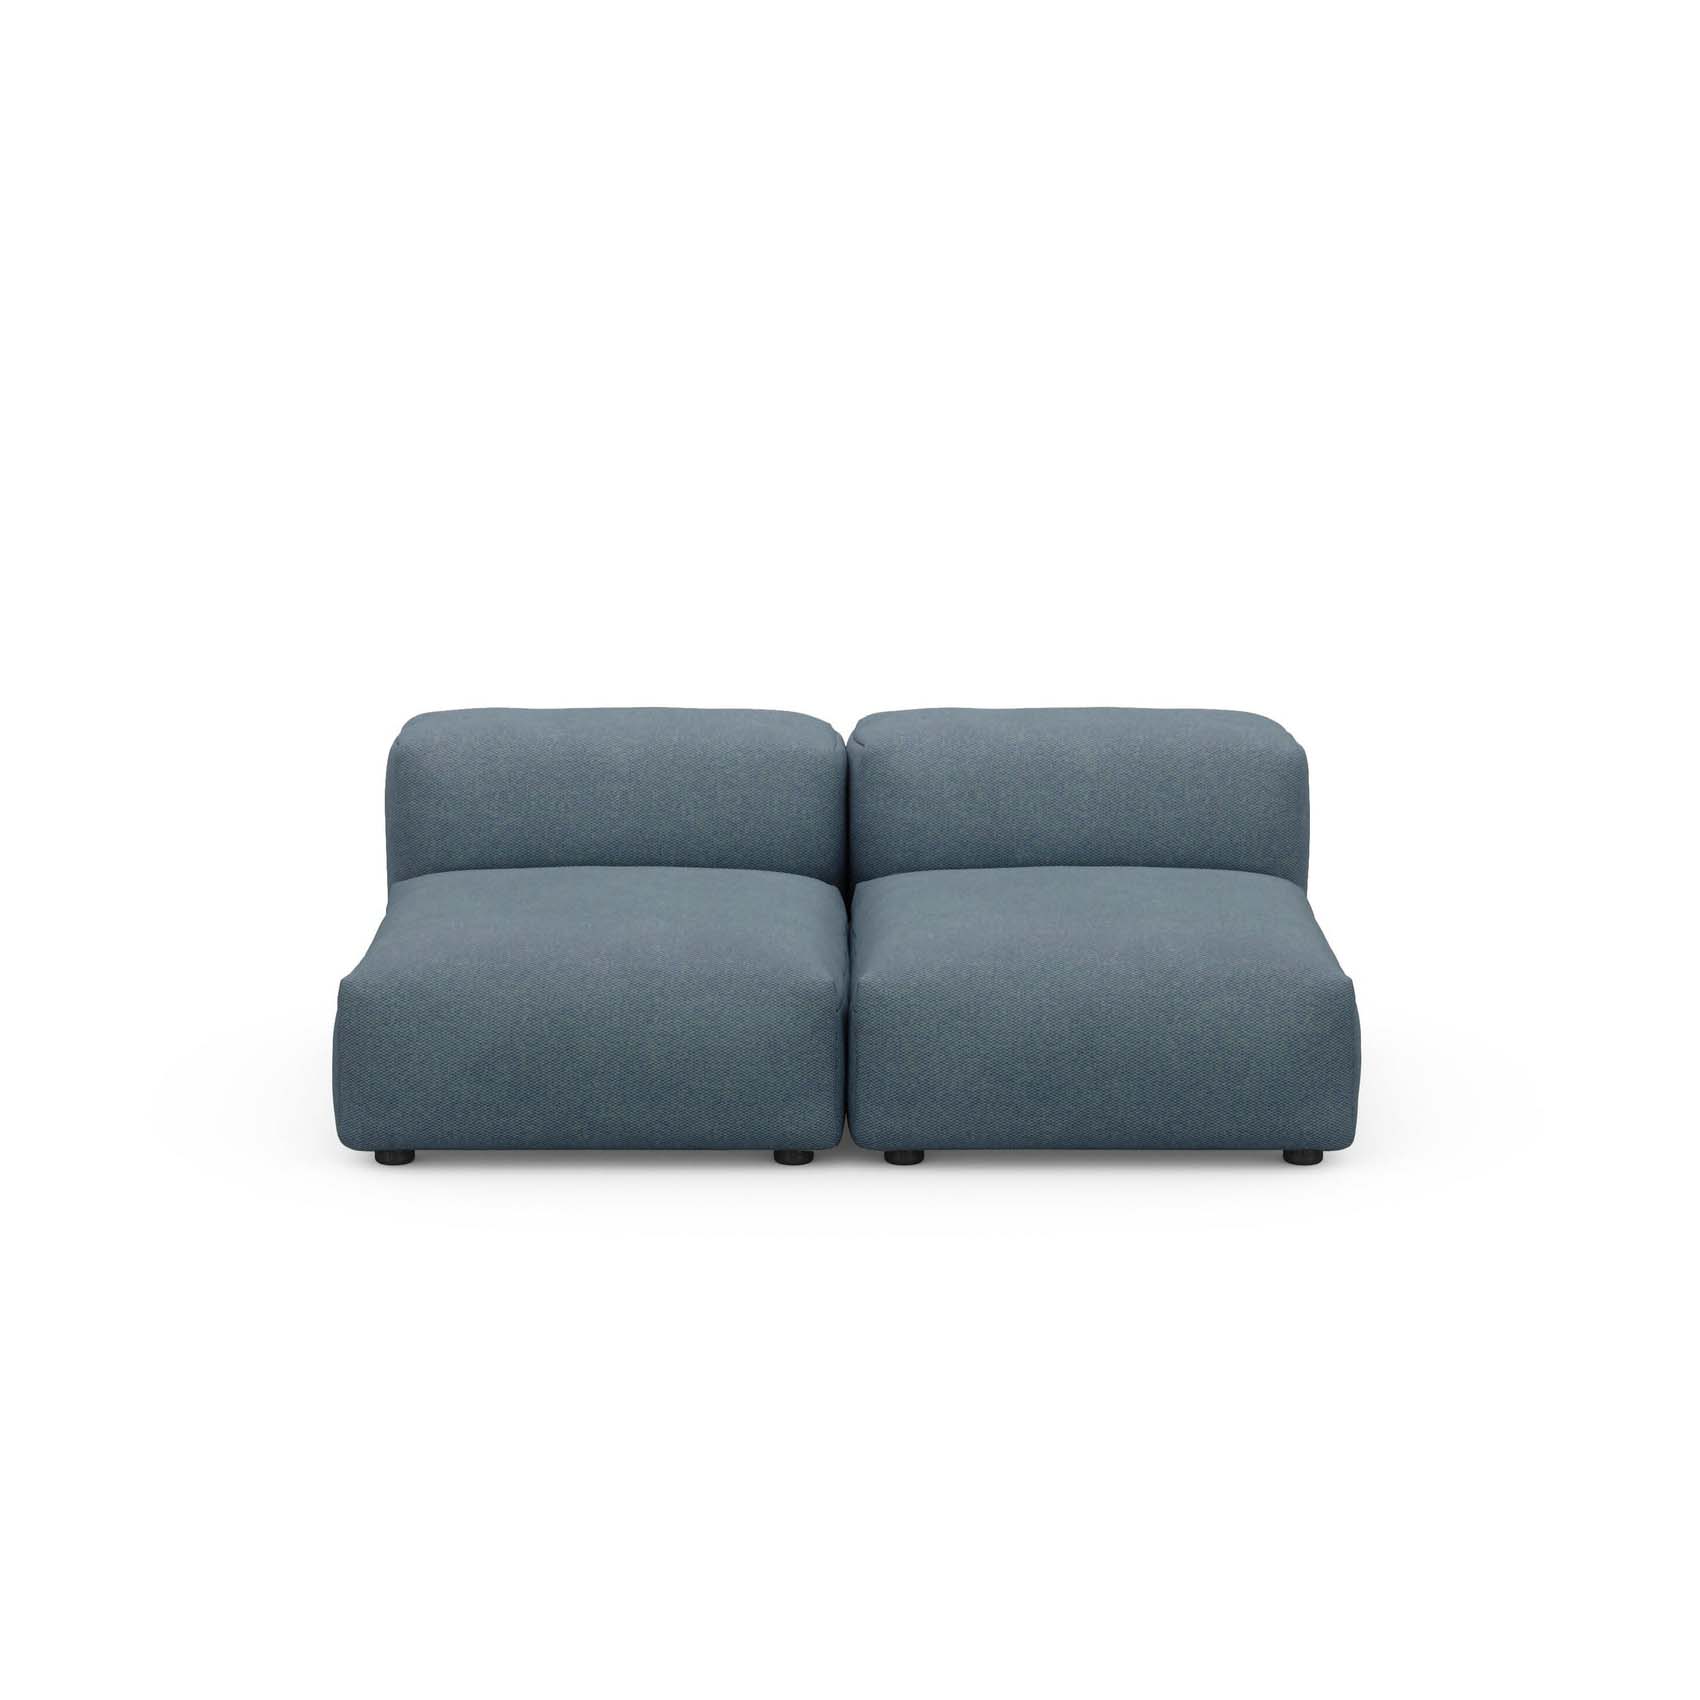 Two Seat Lounge Sofa S Pique Dark Blue